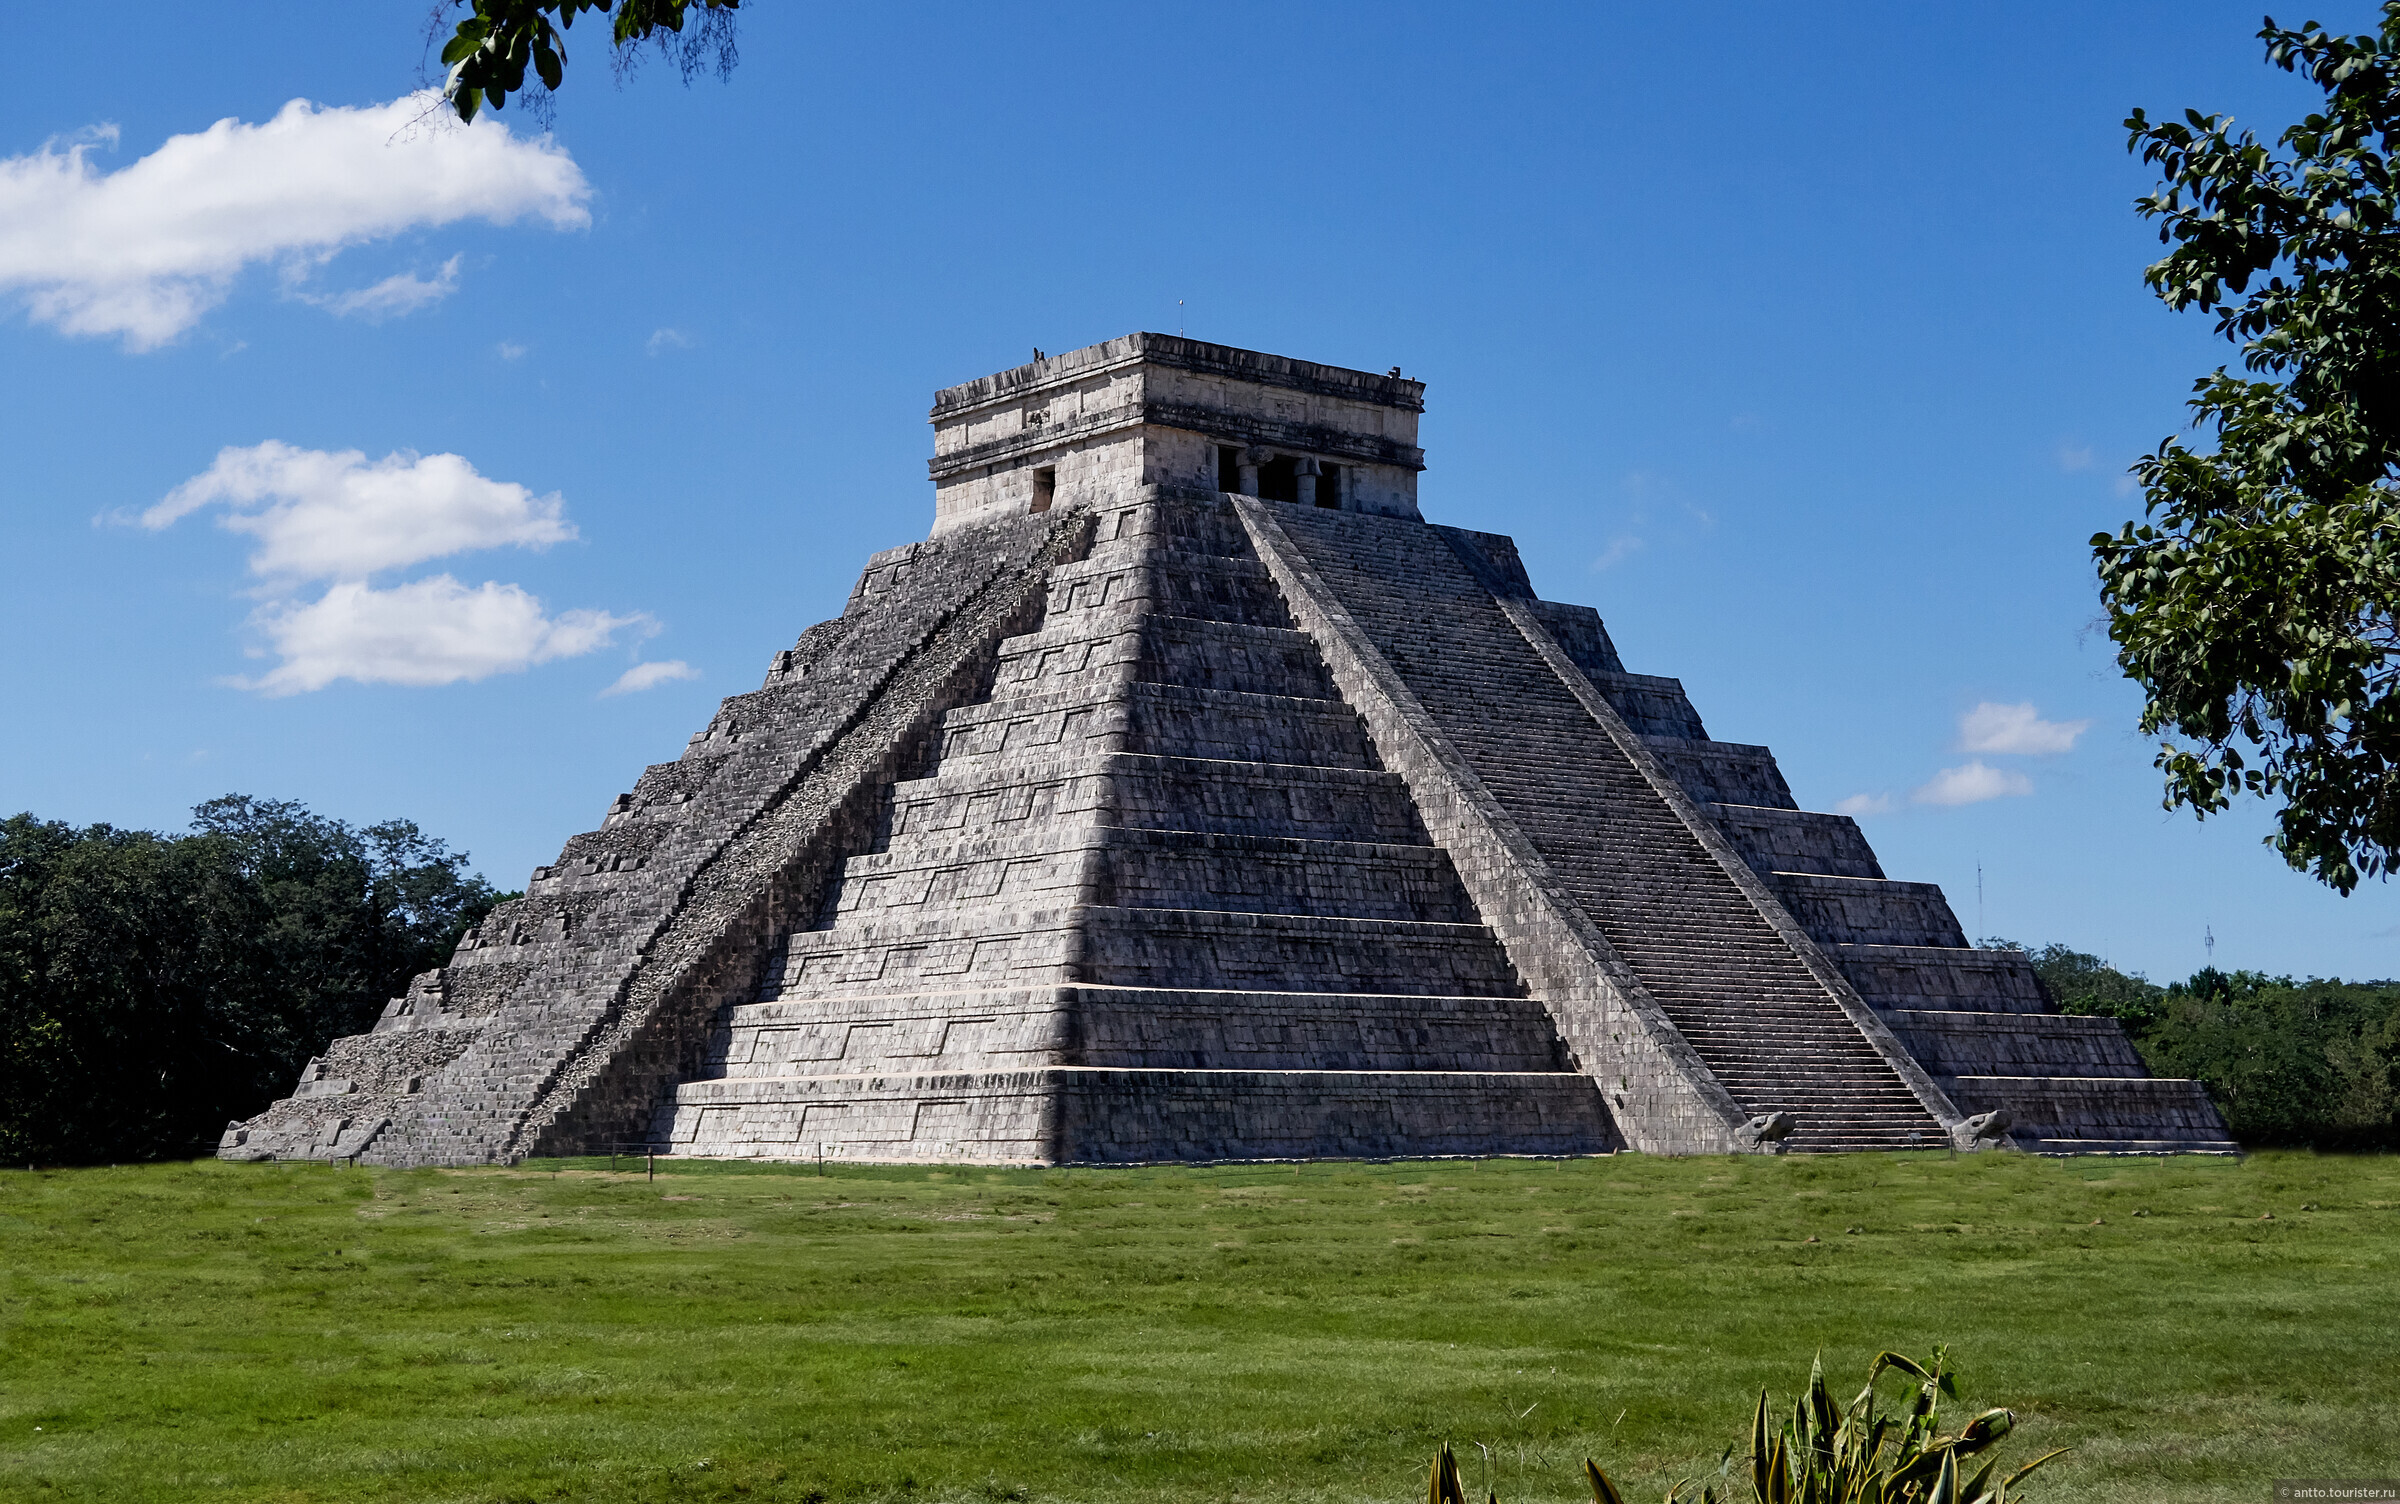 Древний город чичен ица. Пирамида Майя Чичен-ица Майя. Мексика Юкатан пирамиды. Юкатан пирамиды Майя. Мексика Чичен ица пирамида Кукулькана.